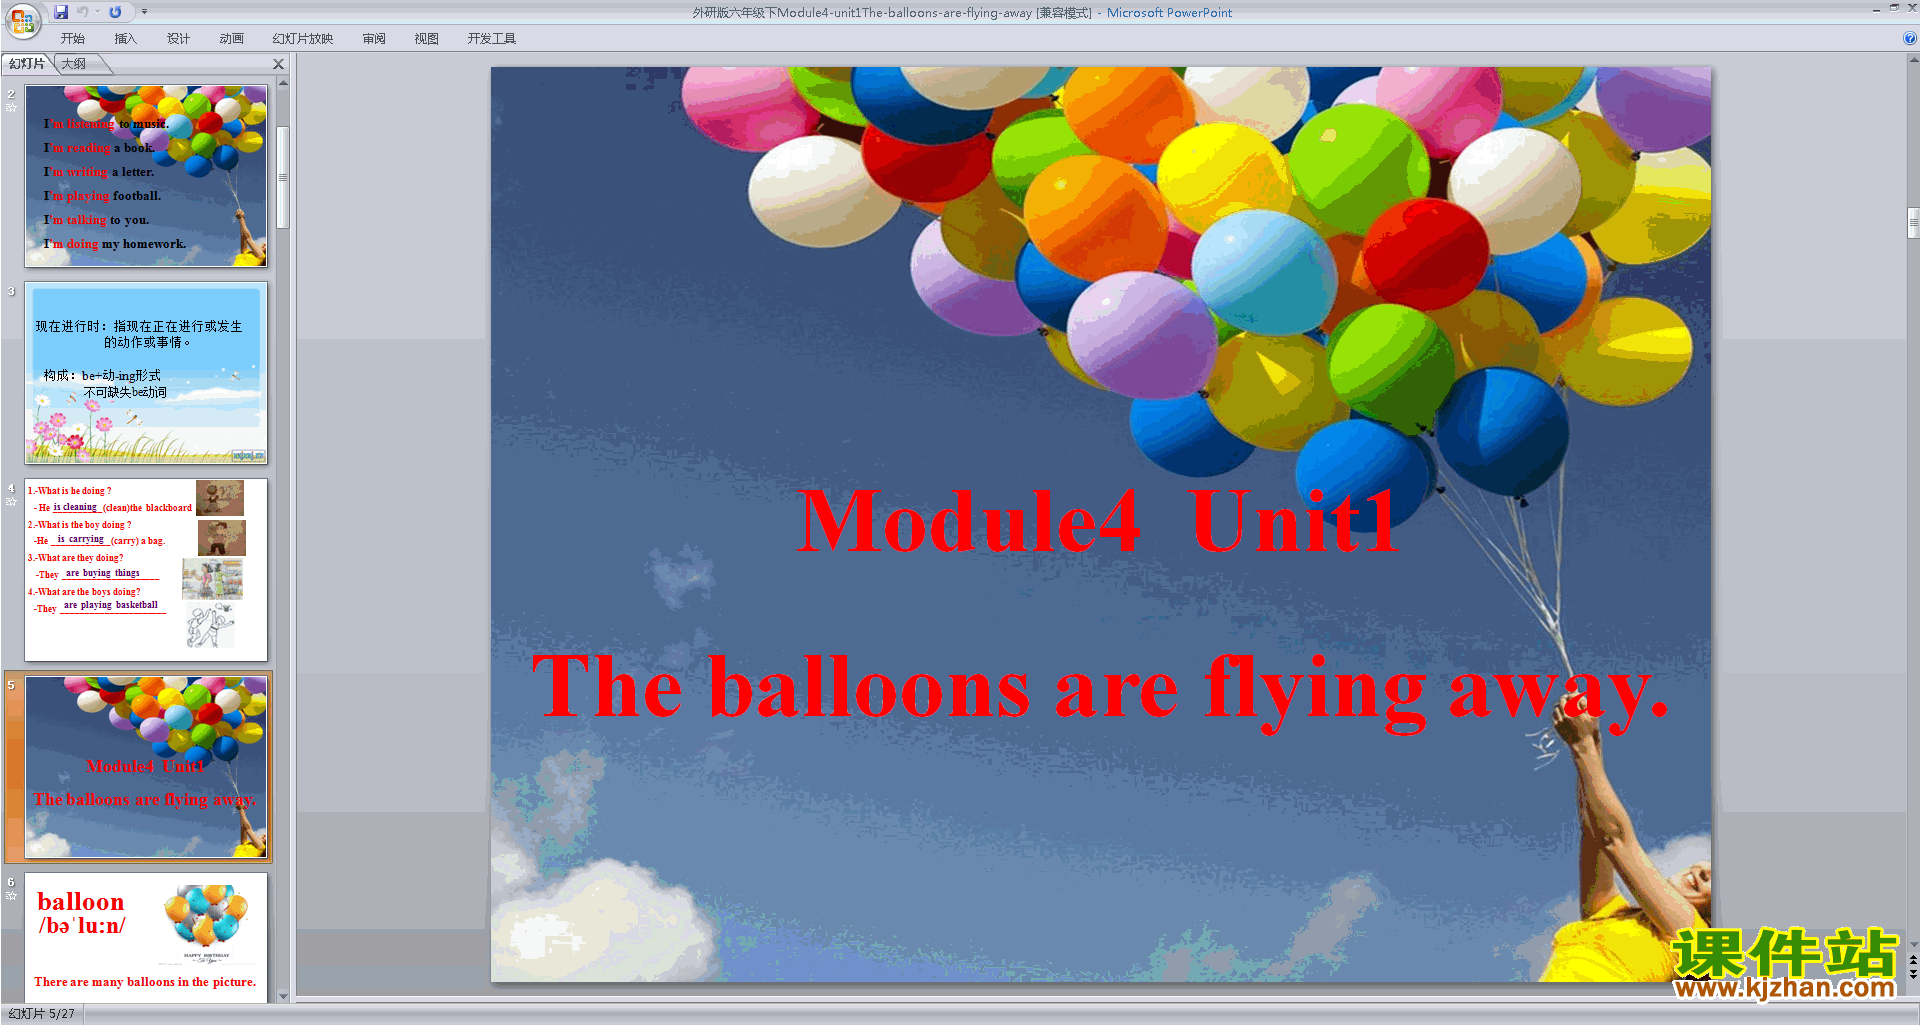 ӢModule4 Unit1 The balloons are flying awaypptμ